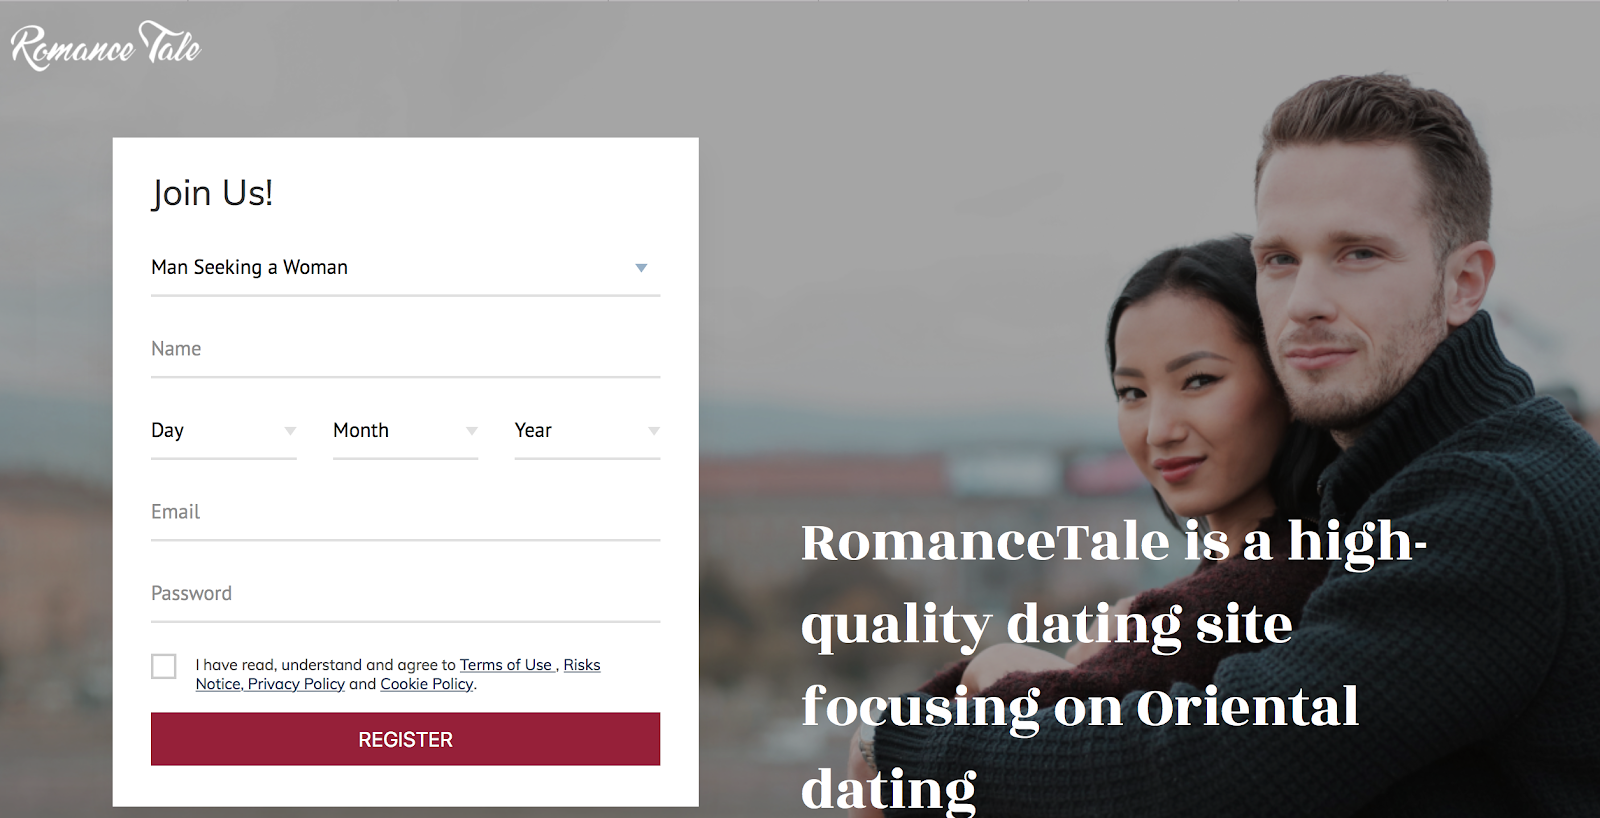 romancetale.com